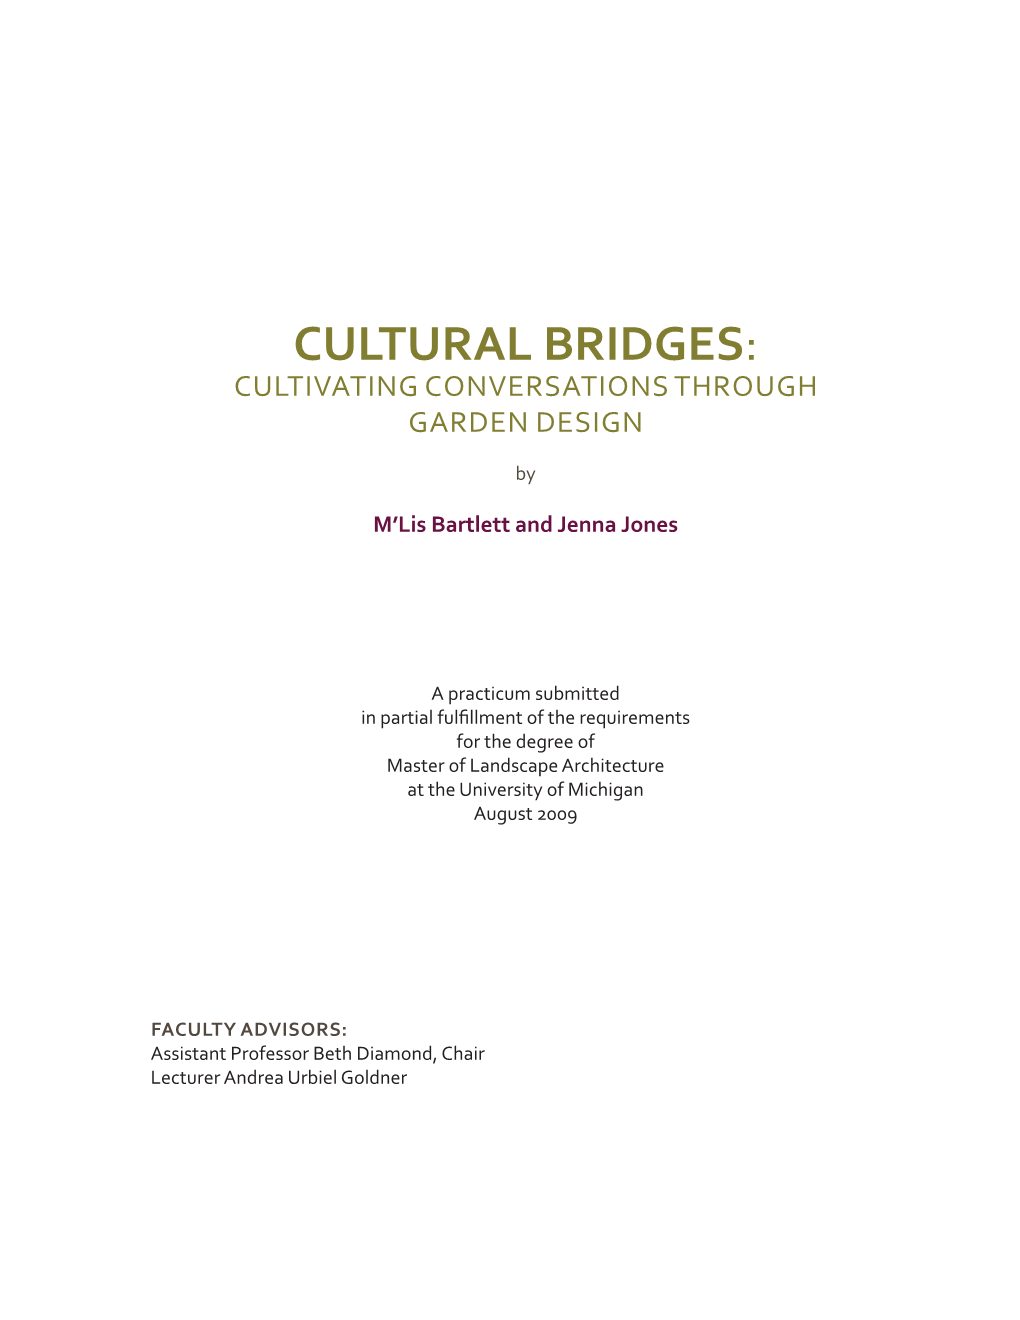 Cultural Bridges: Cultivating Conversations Through Garden Design